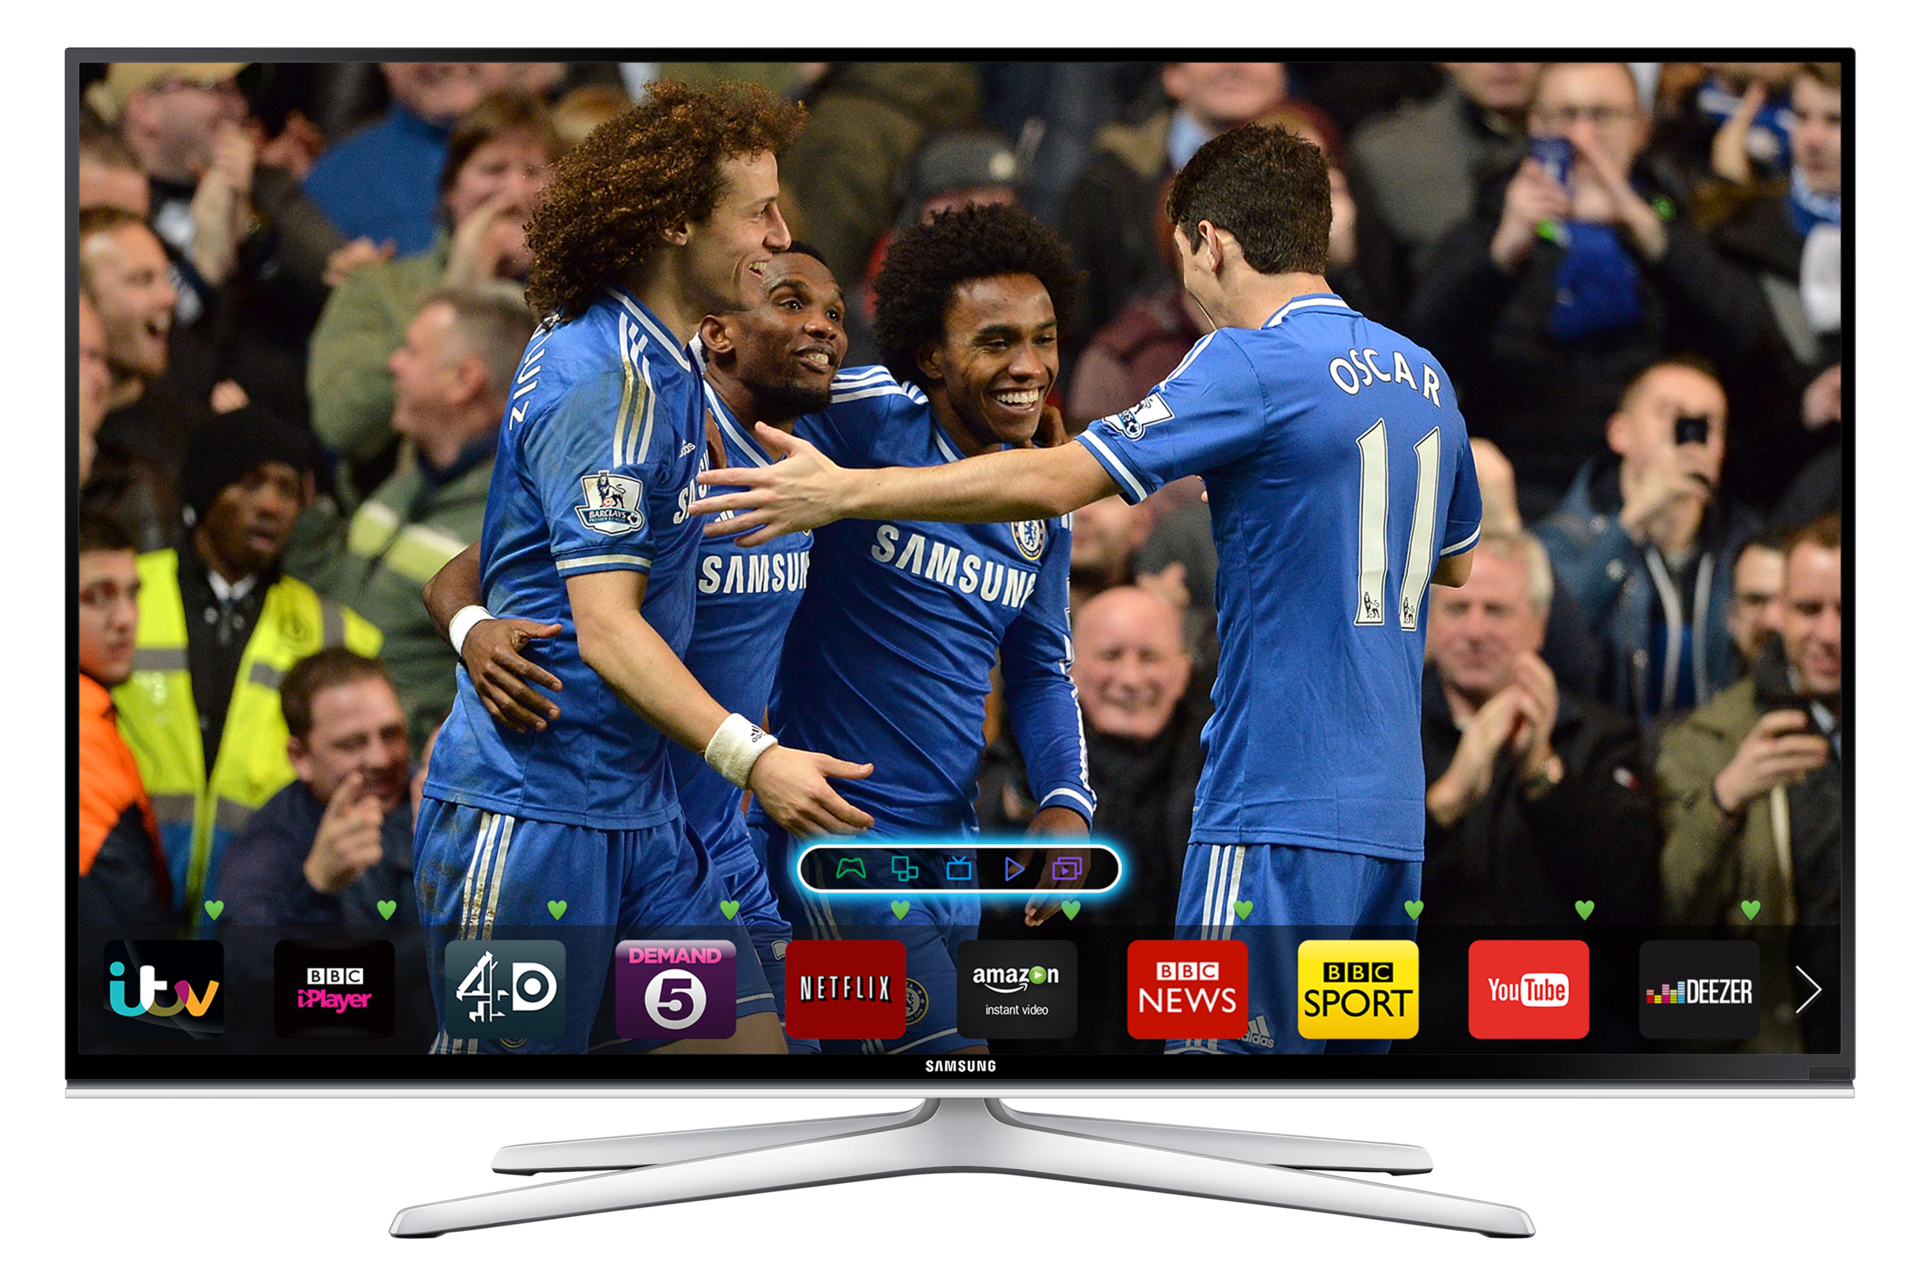 Series 6 3D Full HD LED TV | Support UK